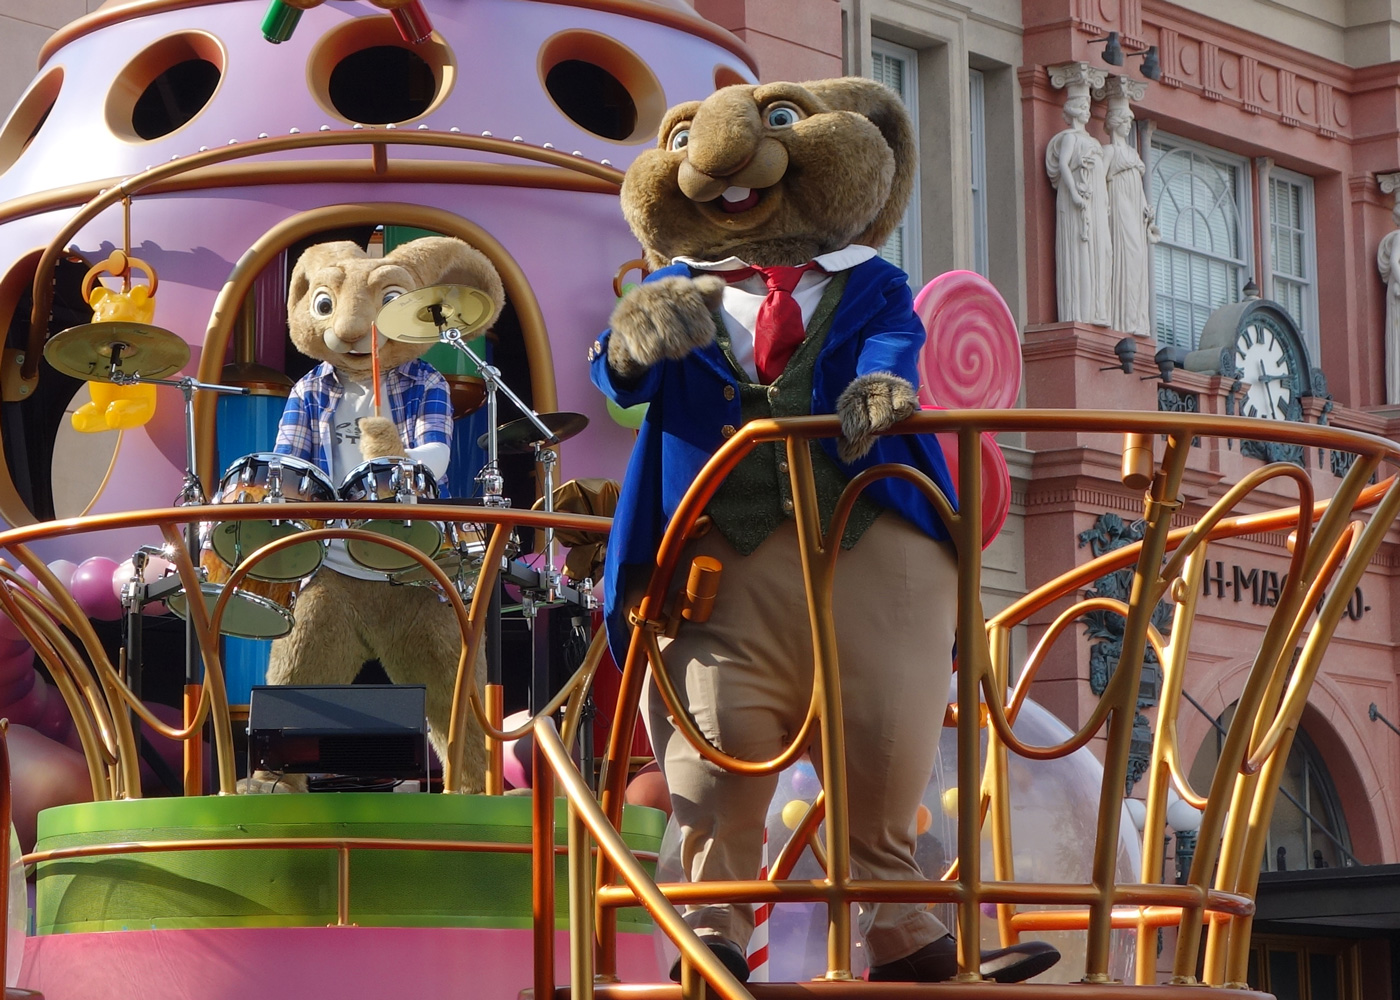 Mr Bunny and E.B. Universal Studios 2012 parade unit